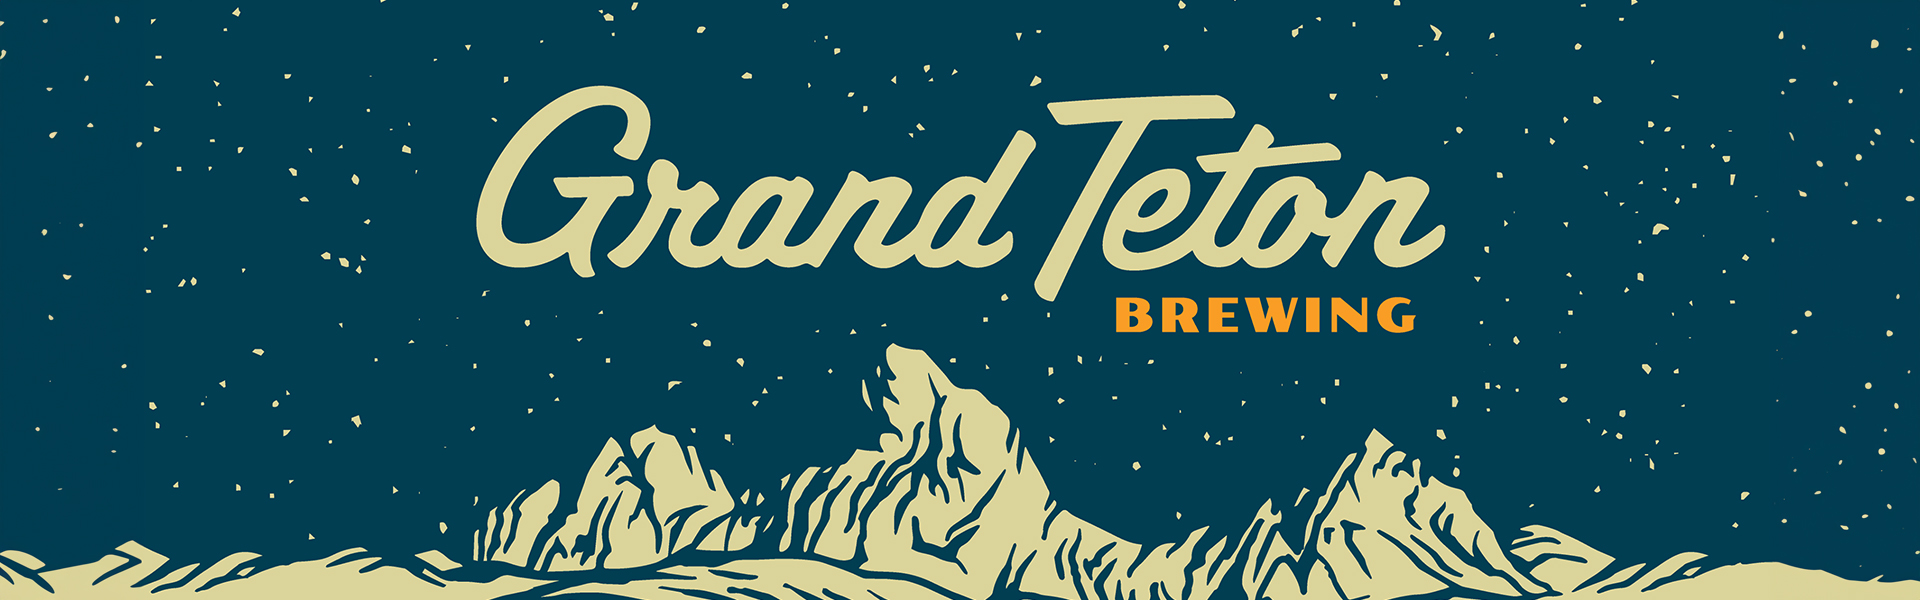 Grand Teton Brewing